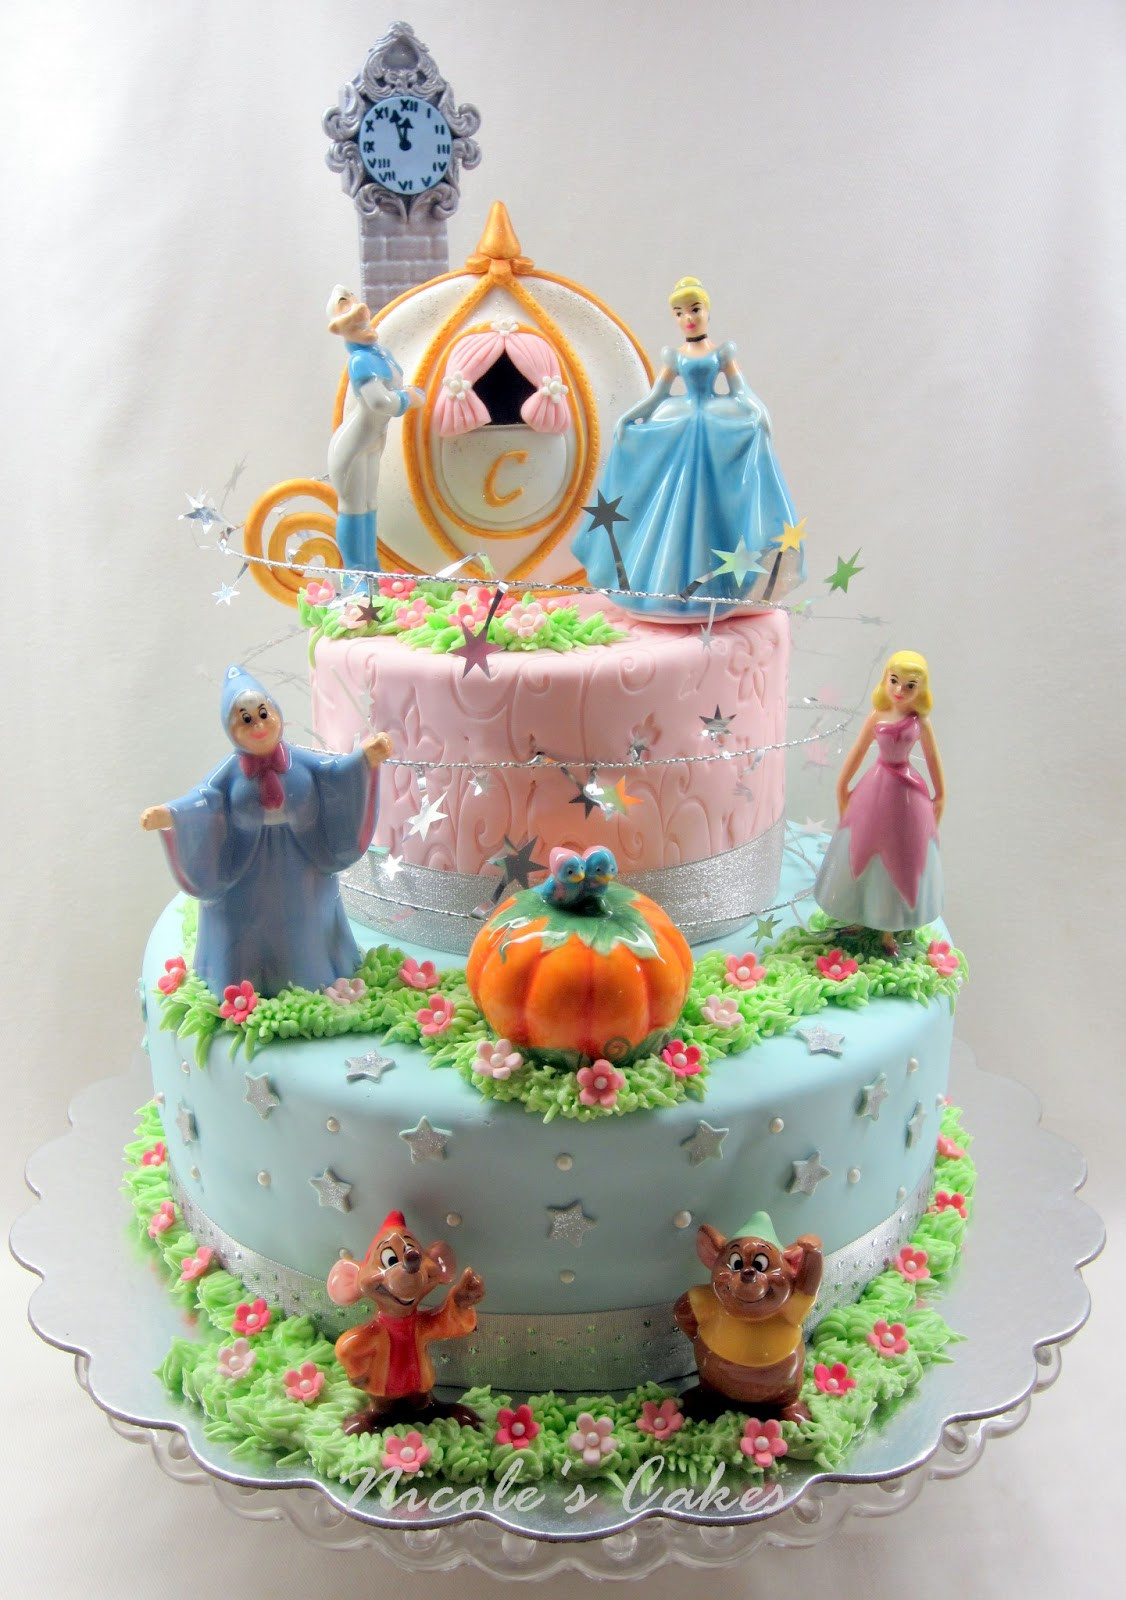 Cinderella Birthday Cake
 Birthday Cakes The Cinderella Story A Birthday Cake